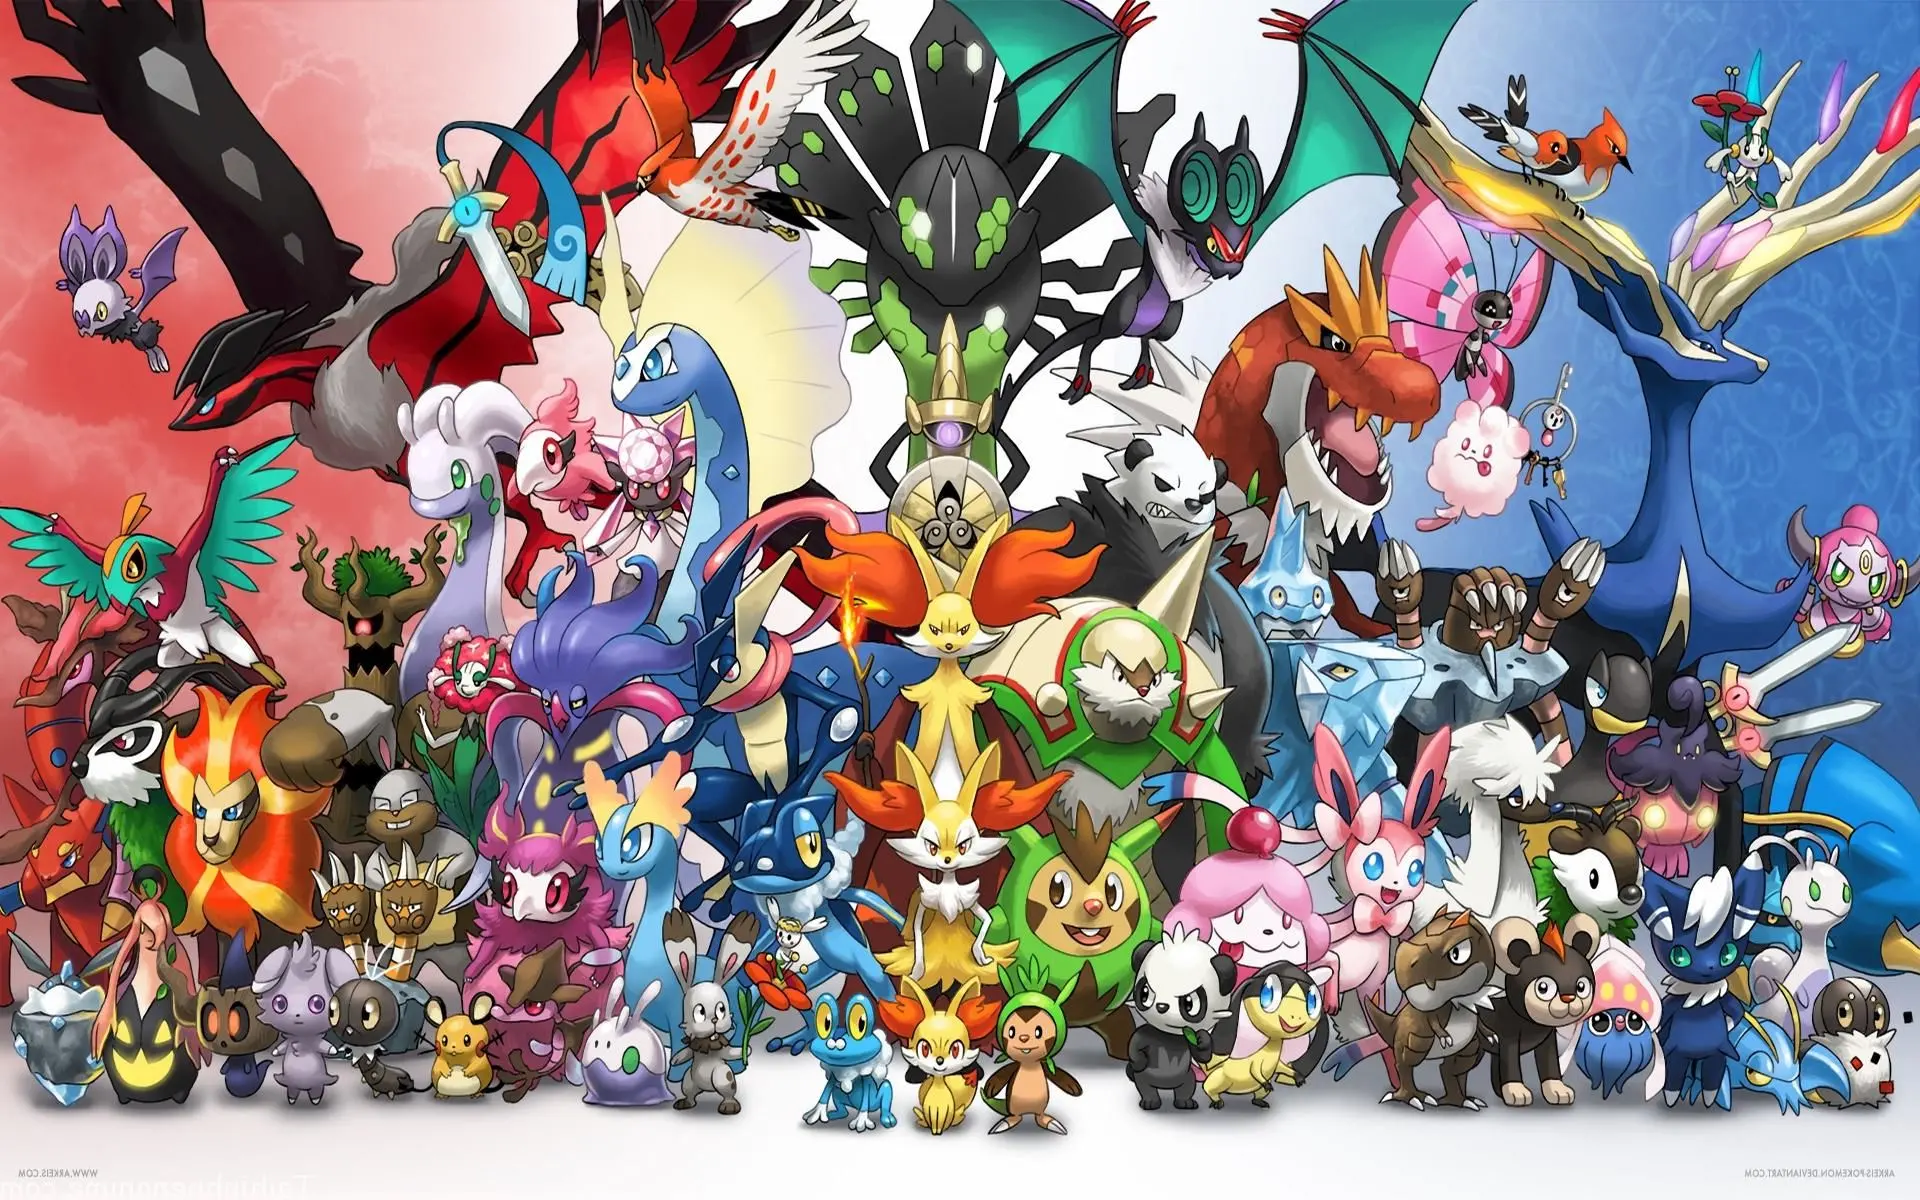 Unduh kumpulan wallpaper Pokemon legendaris | Latar belakang Pokemon, Pokemon, Anime